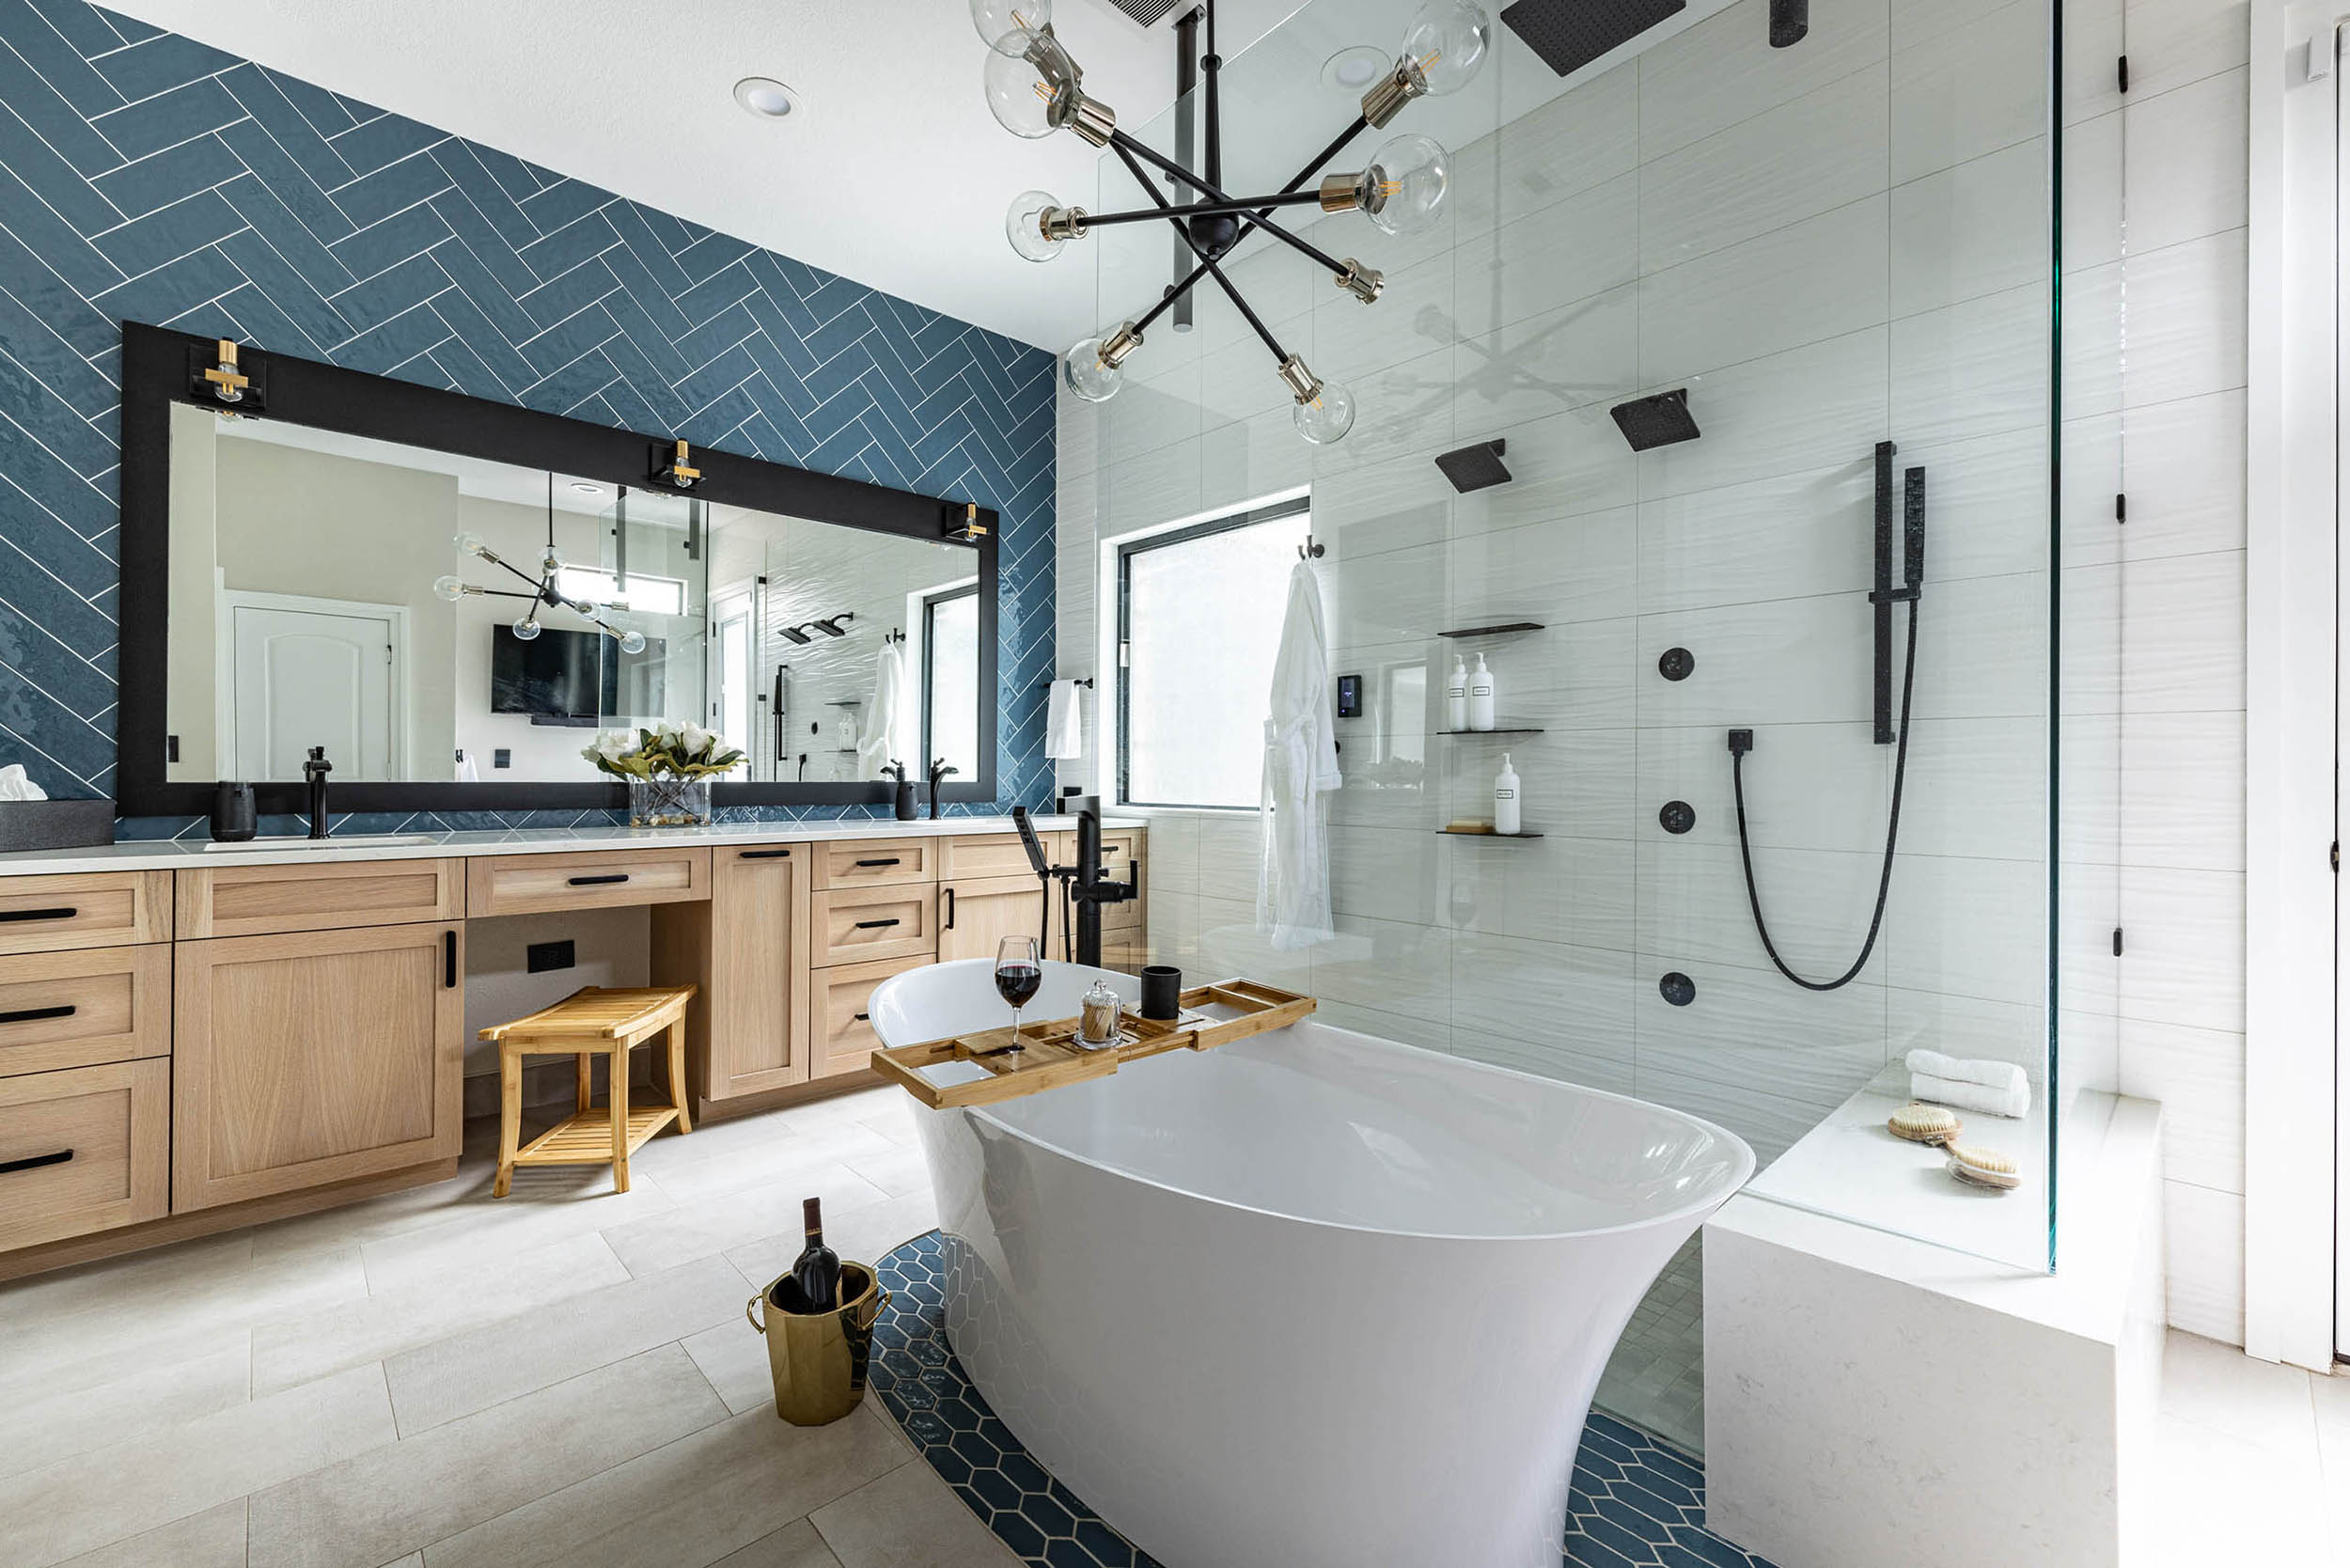 Birkenfeld_Bathroom renovation with standing tub eyecandy light fixture walk-in shower with multiple shower heads custom blue accent tile custom cabinetry in Keller Texas